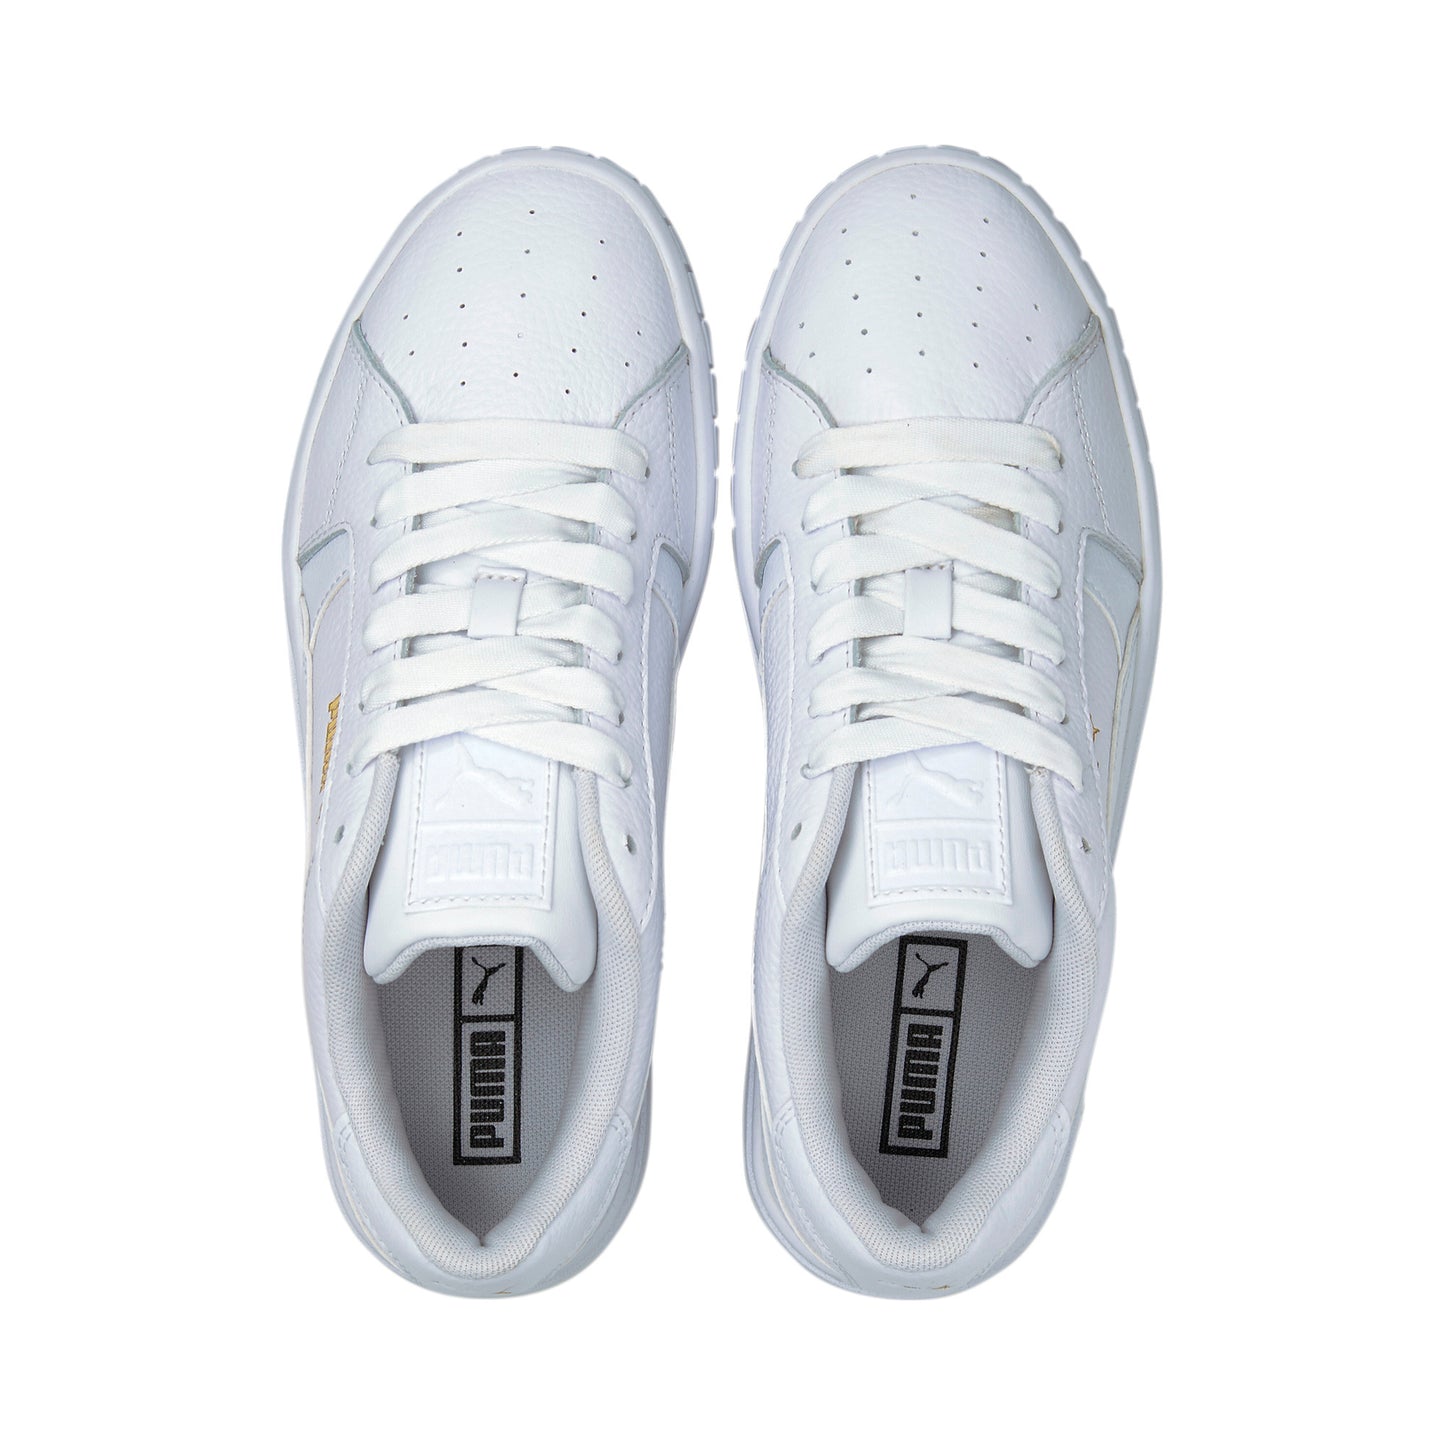 PUMA // Cali Star Women's Sneakers WHITE